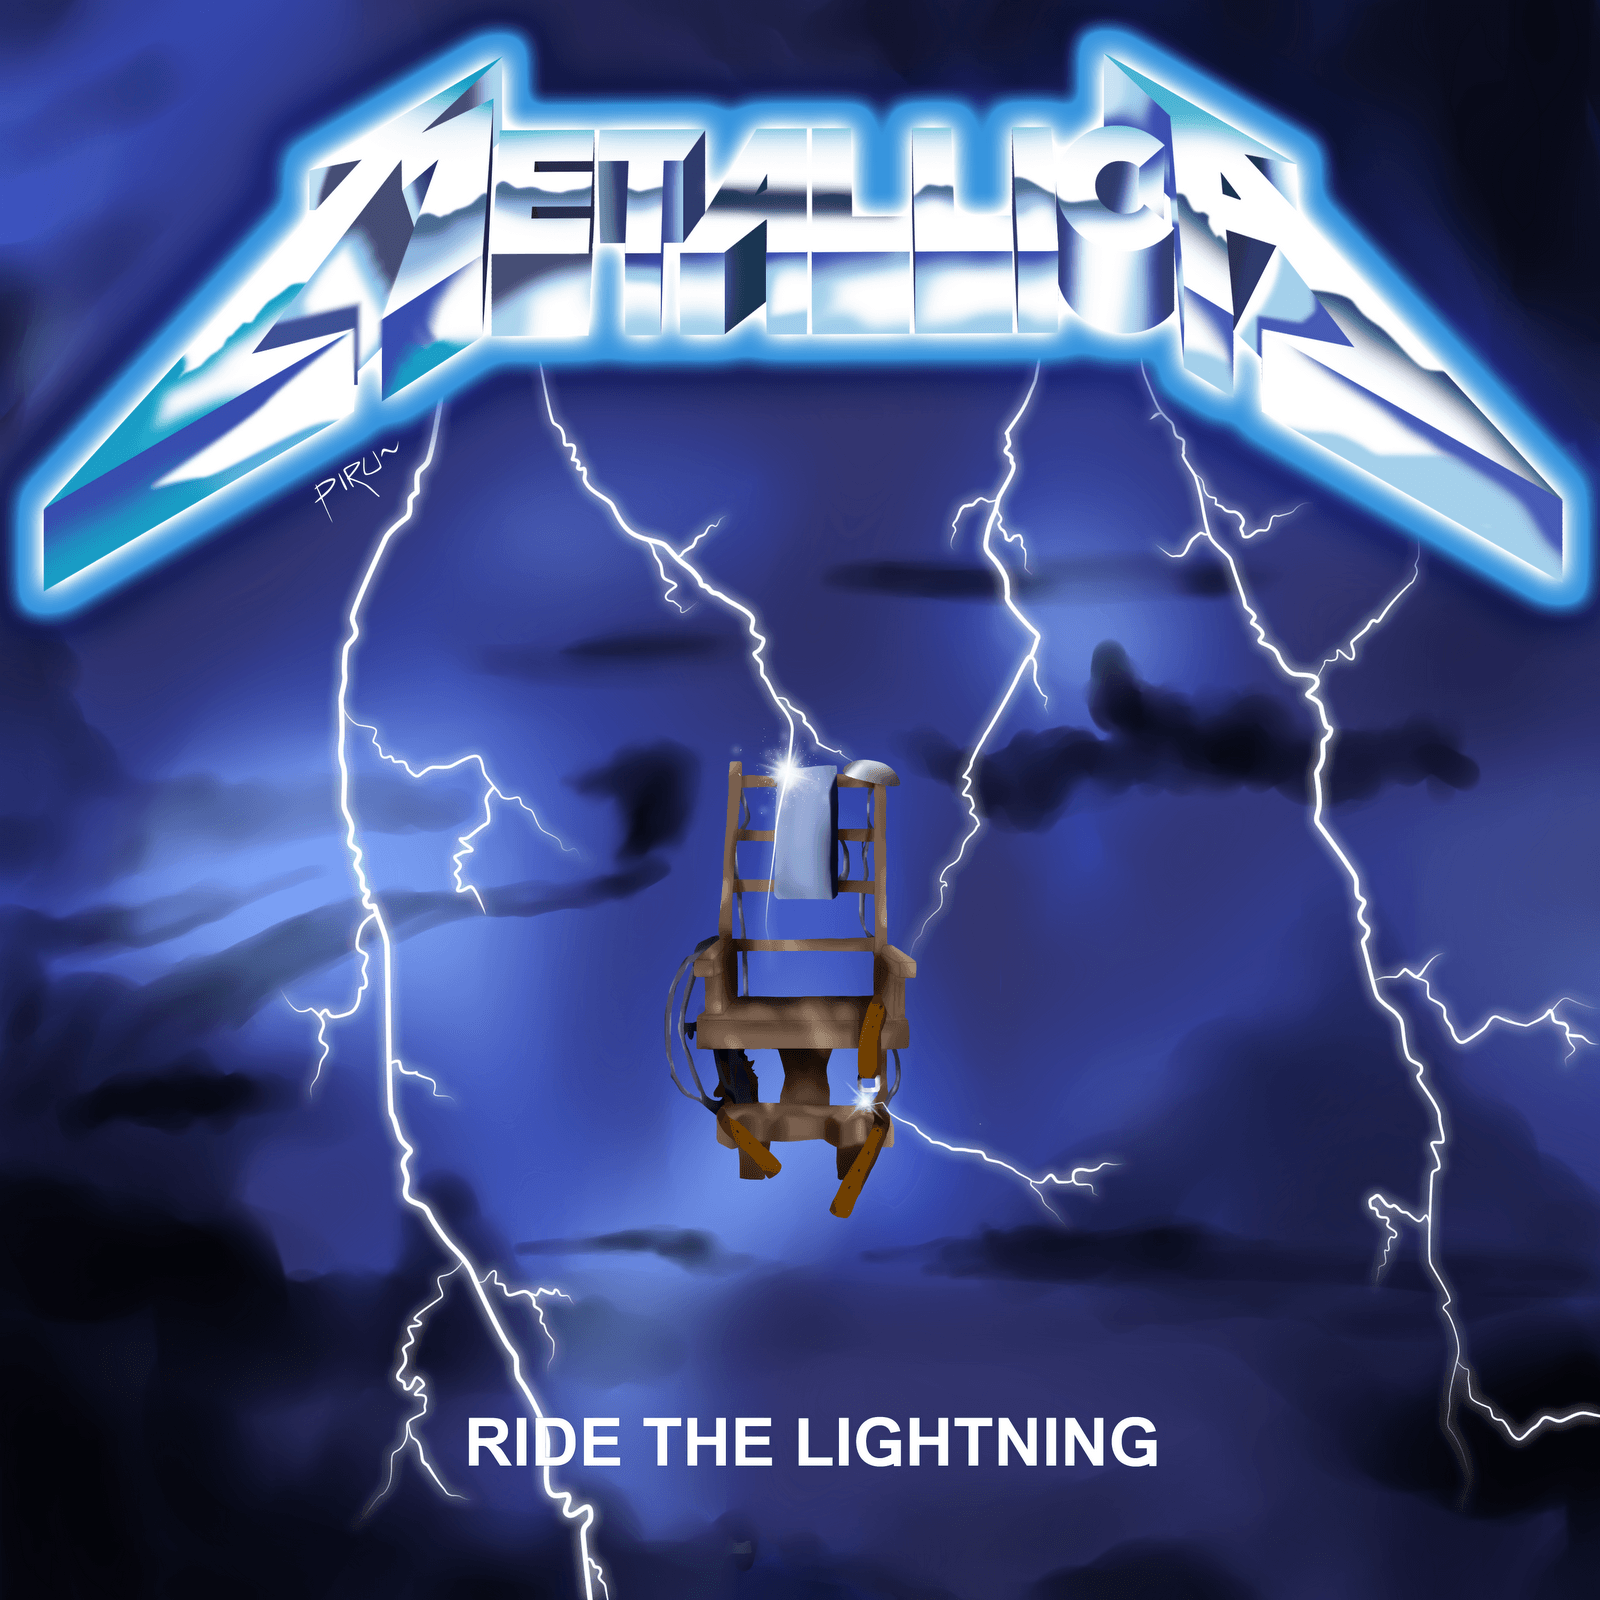 Metallica Ride The Lightning Wallpaper Desktop. Ride the lightning, Metallica, Rock band posters